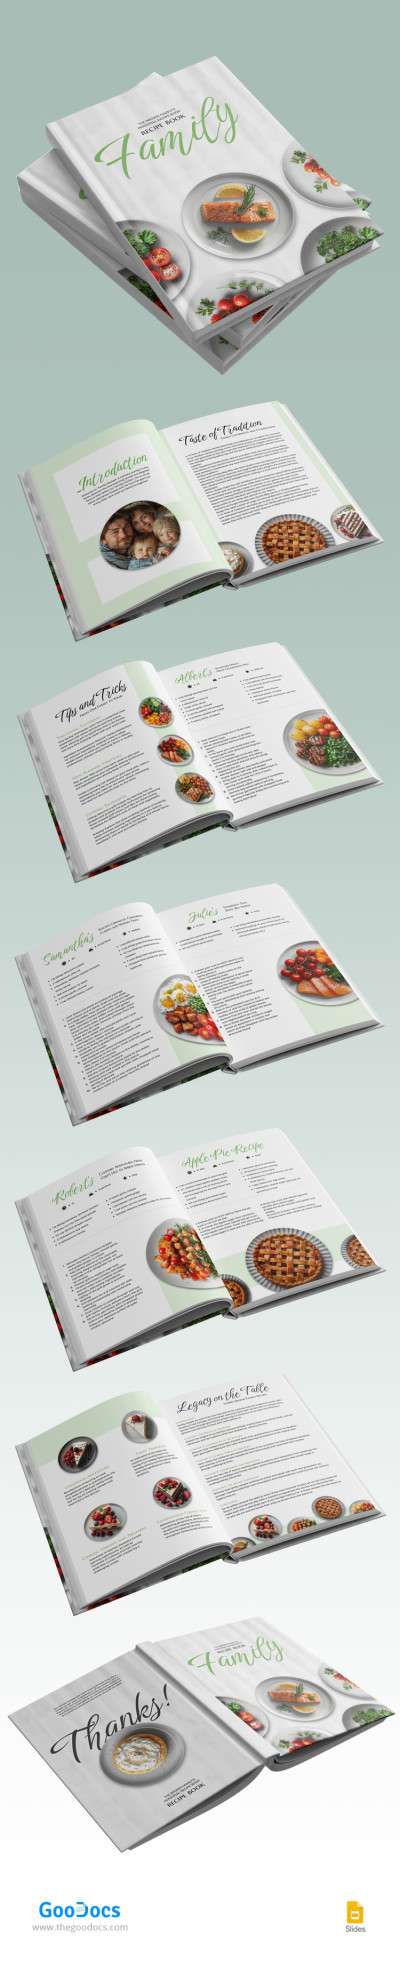 Family Recipes Ebook Template